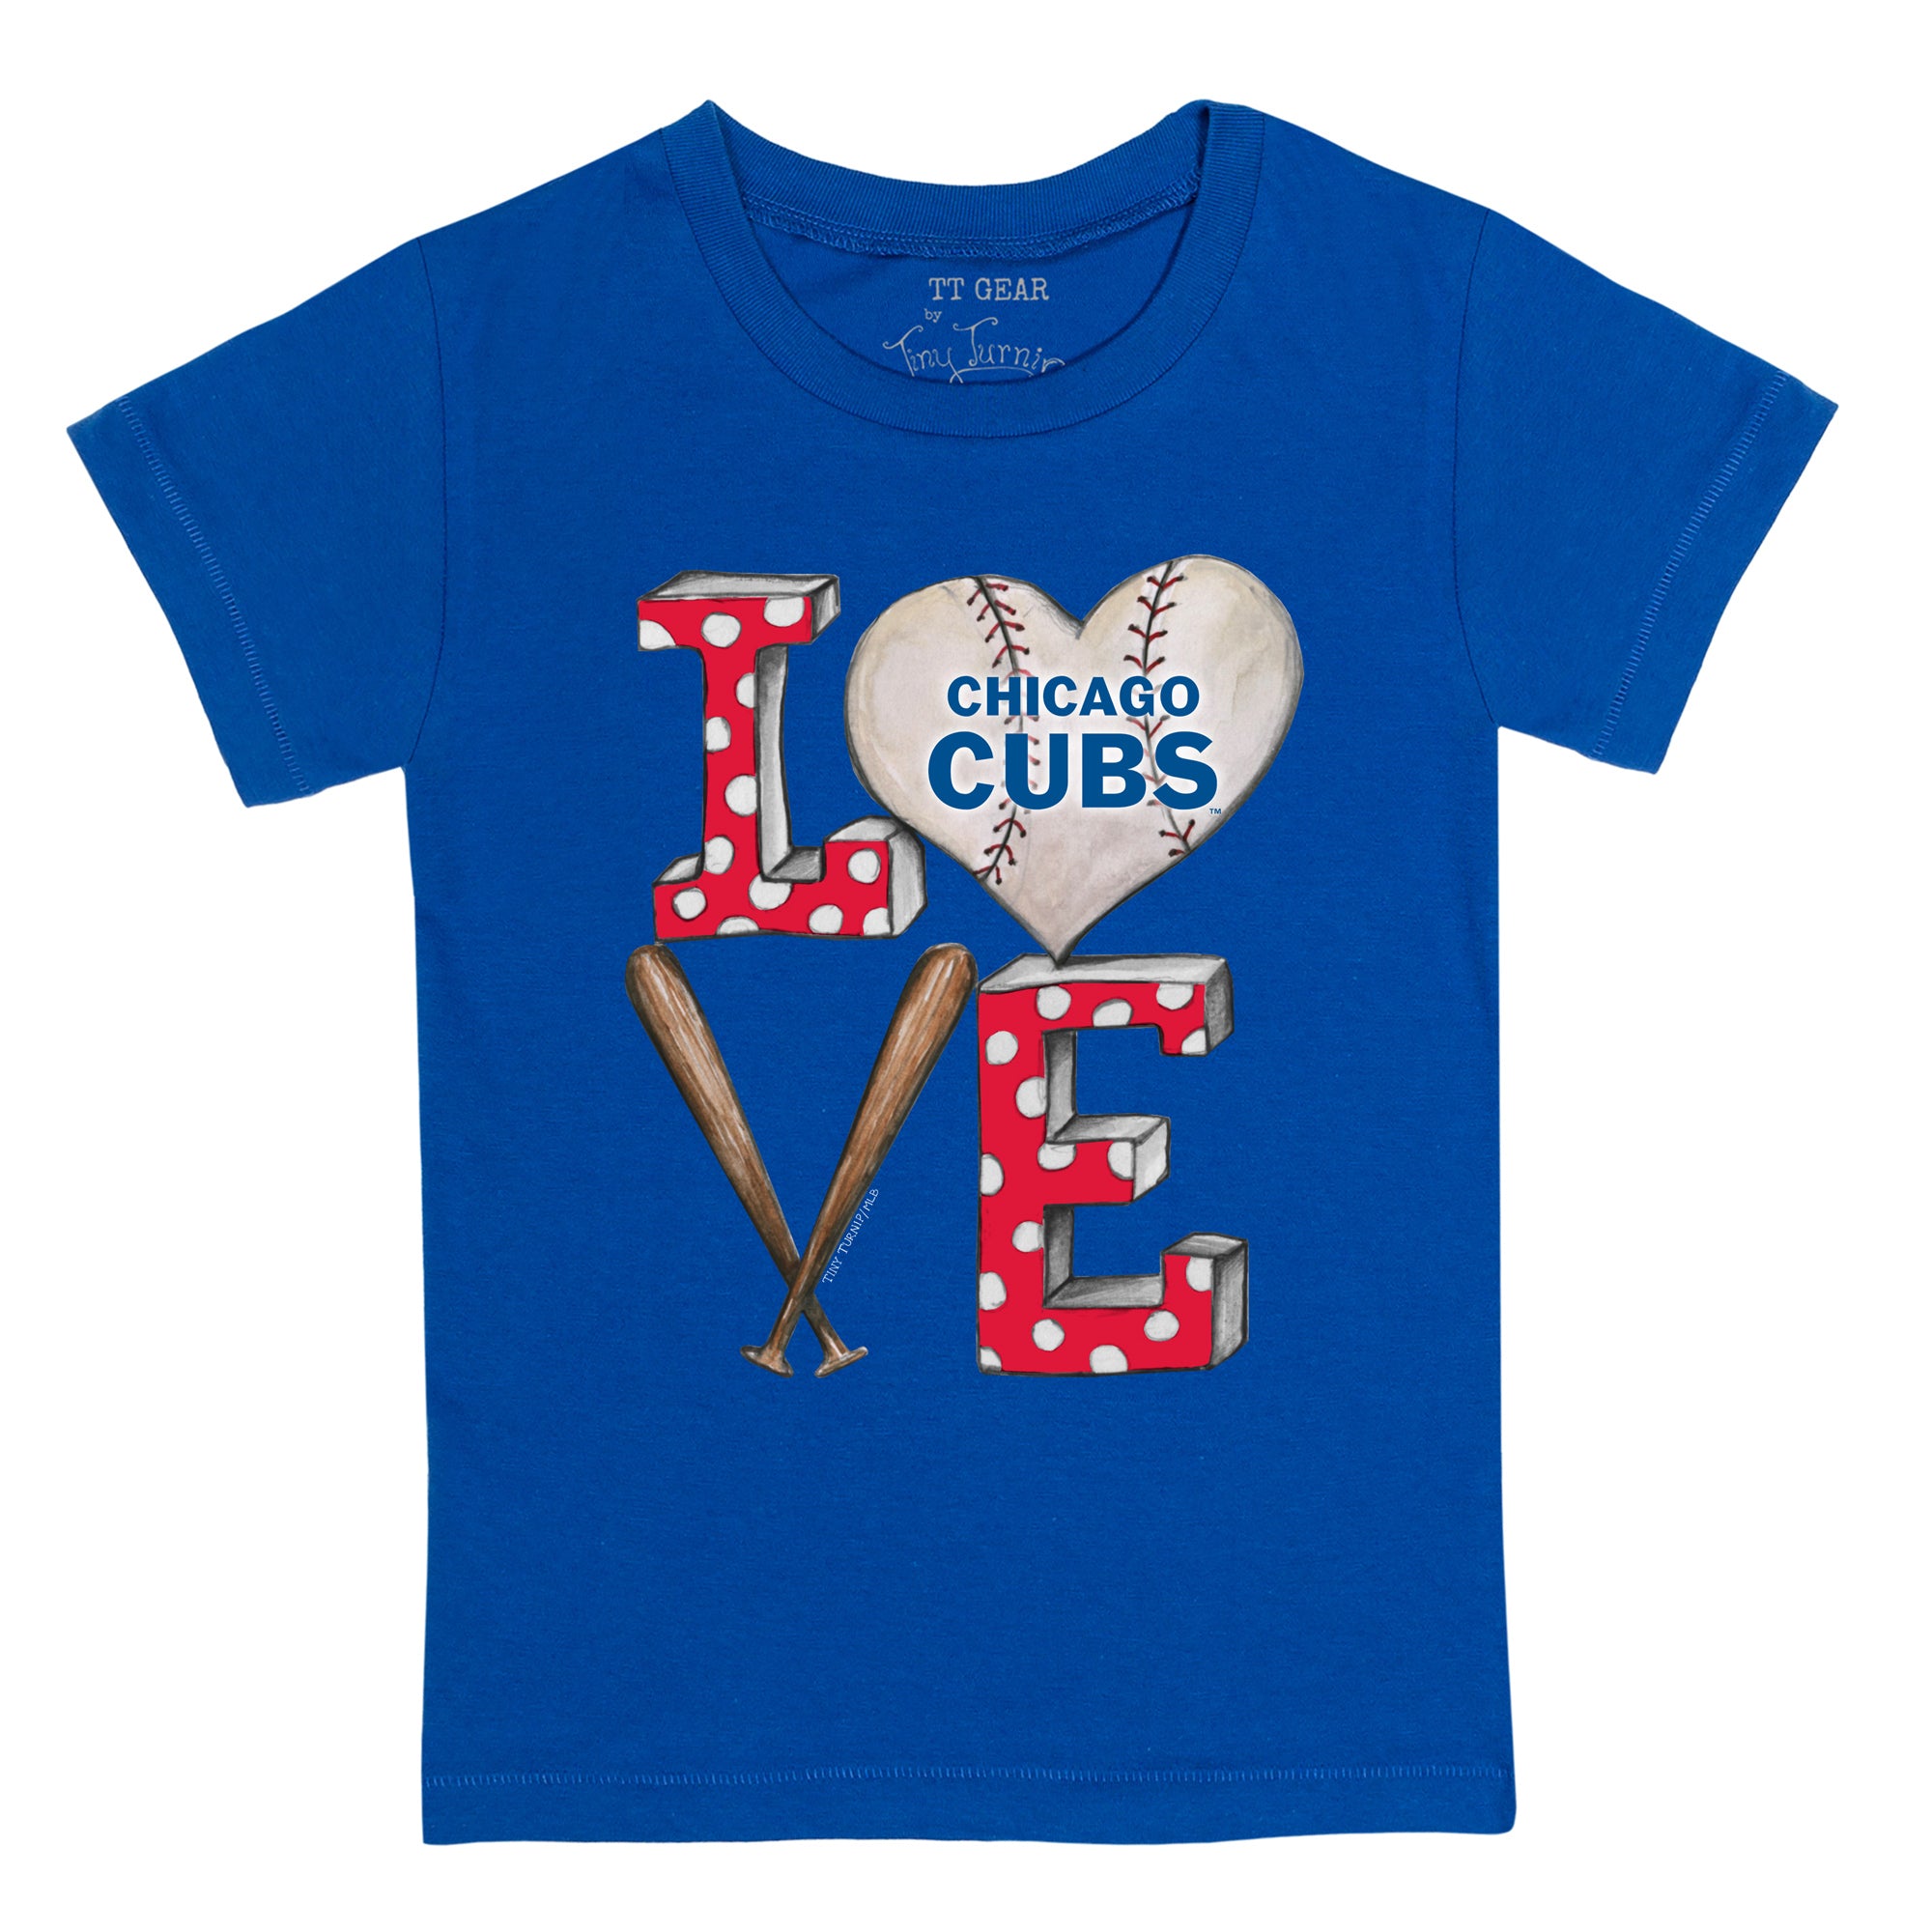 MLB Team Apparel Youth Chicago Cubs Royal Home Run T-Shirt